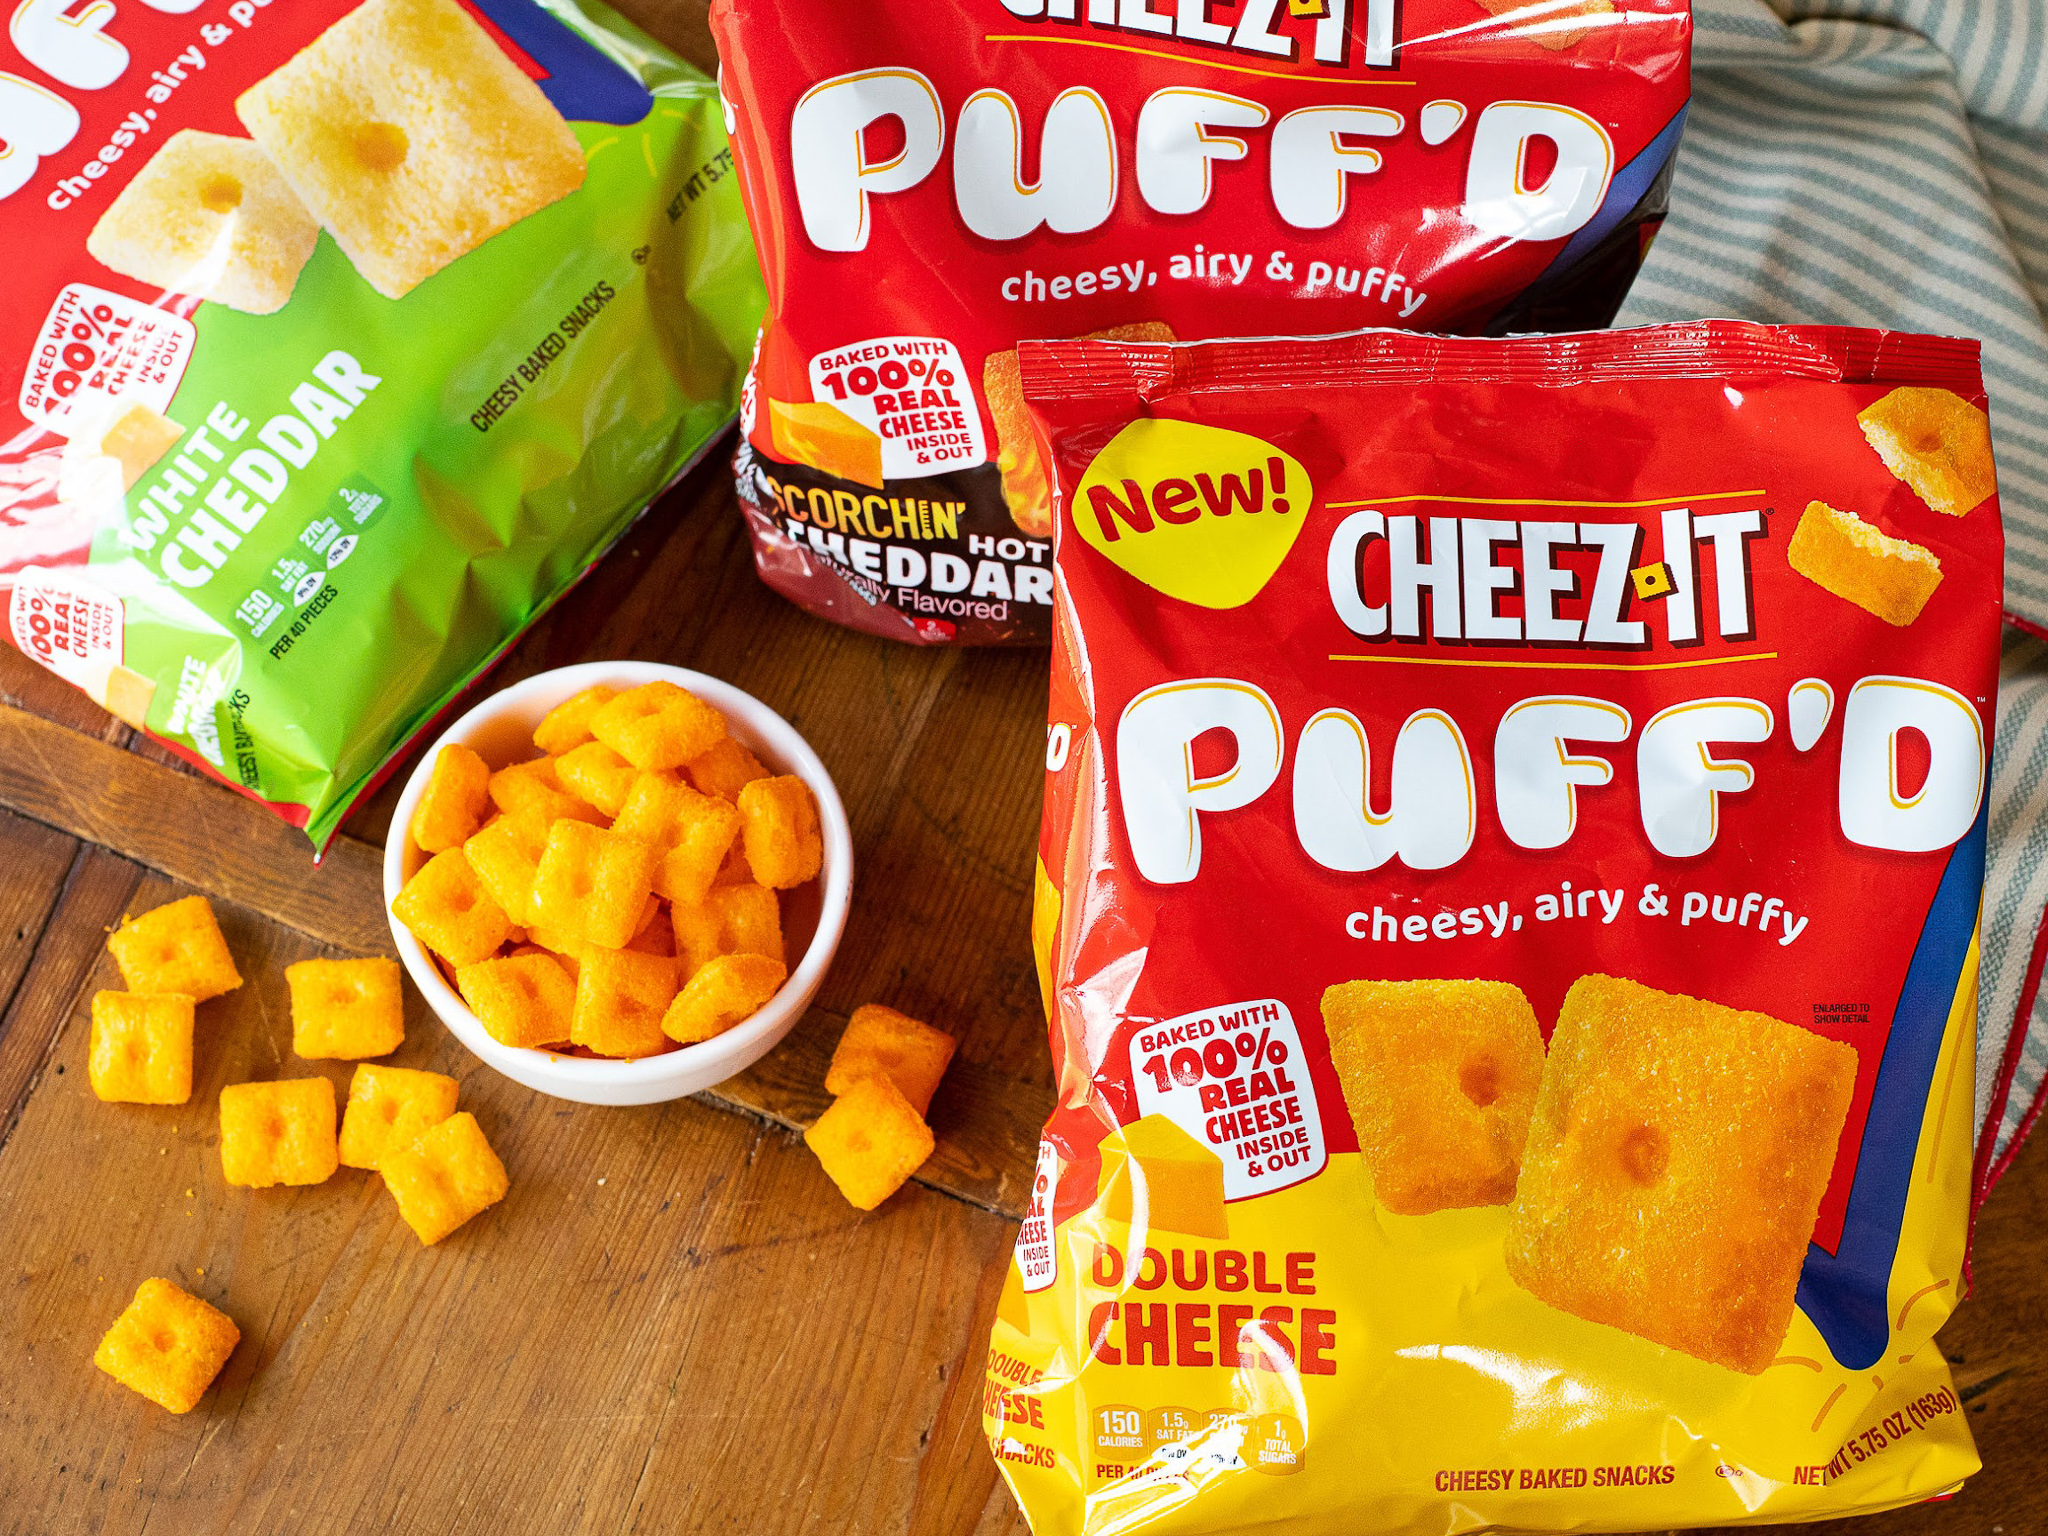 Cheez-It Puff’d Snacks Just $1.75 At Publix